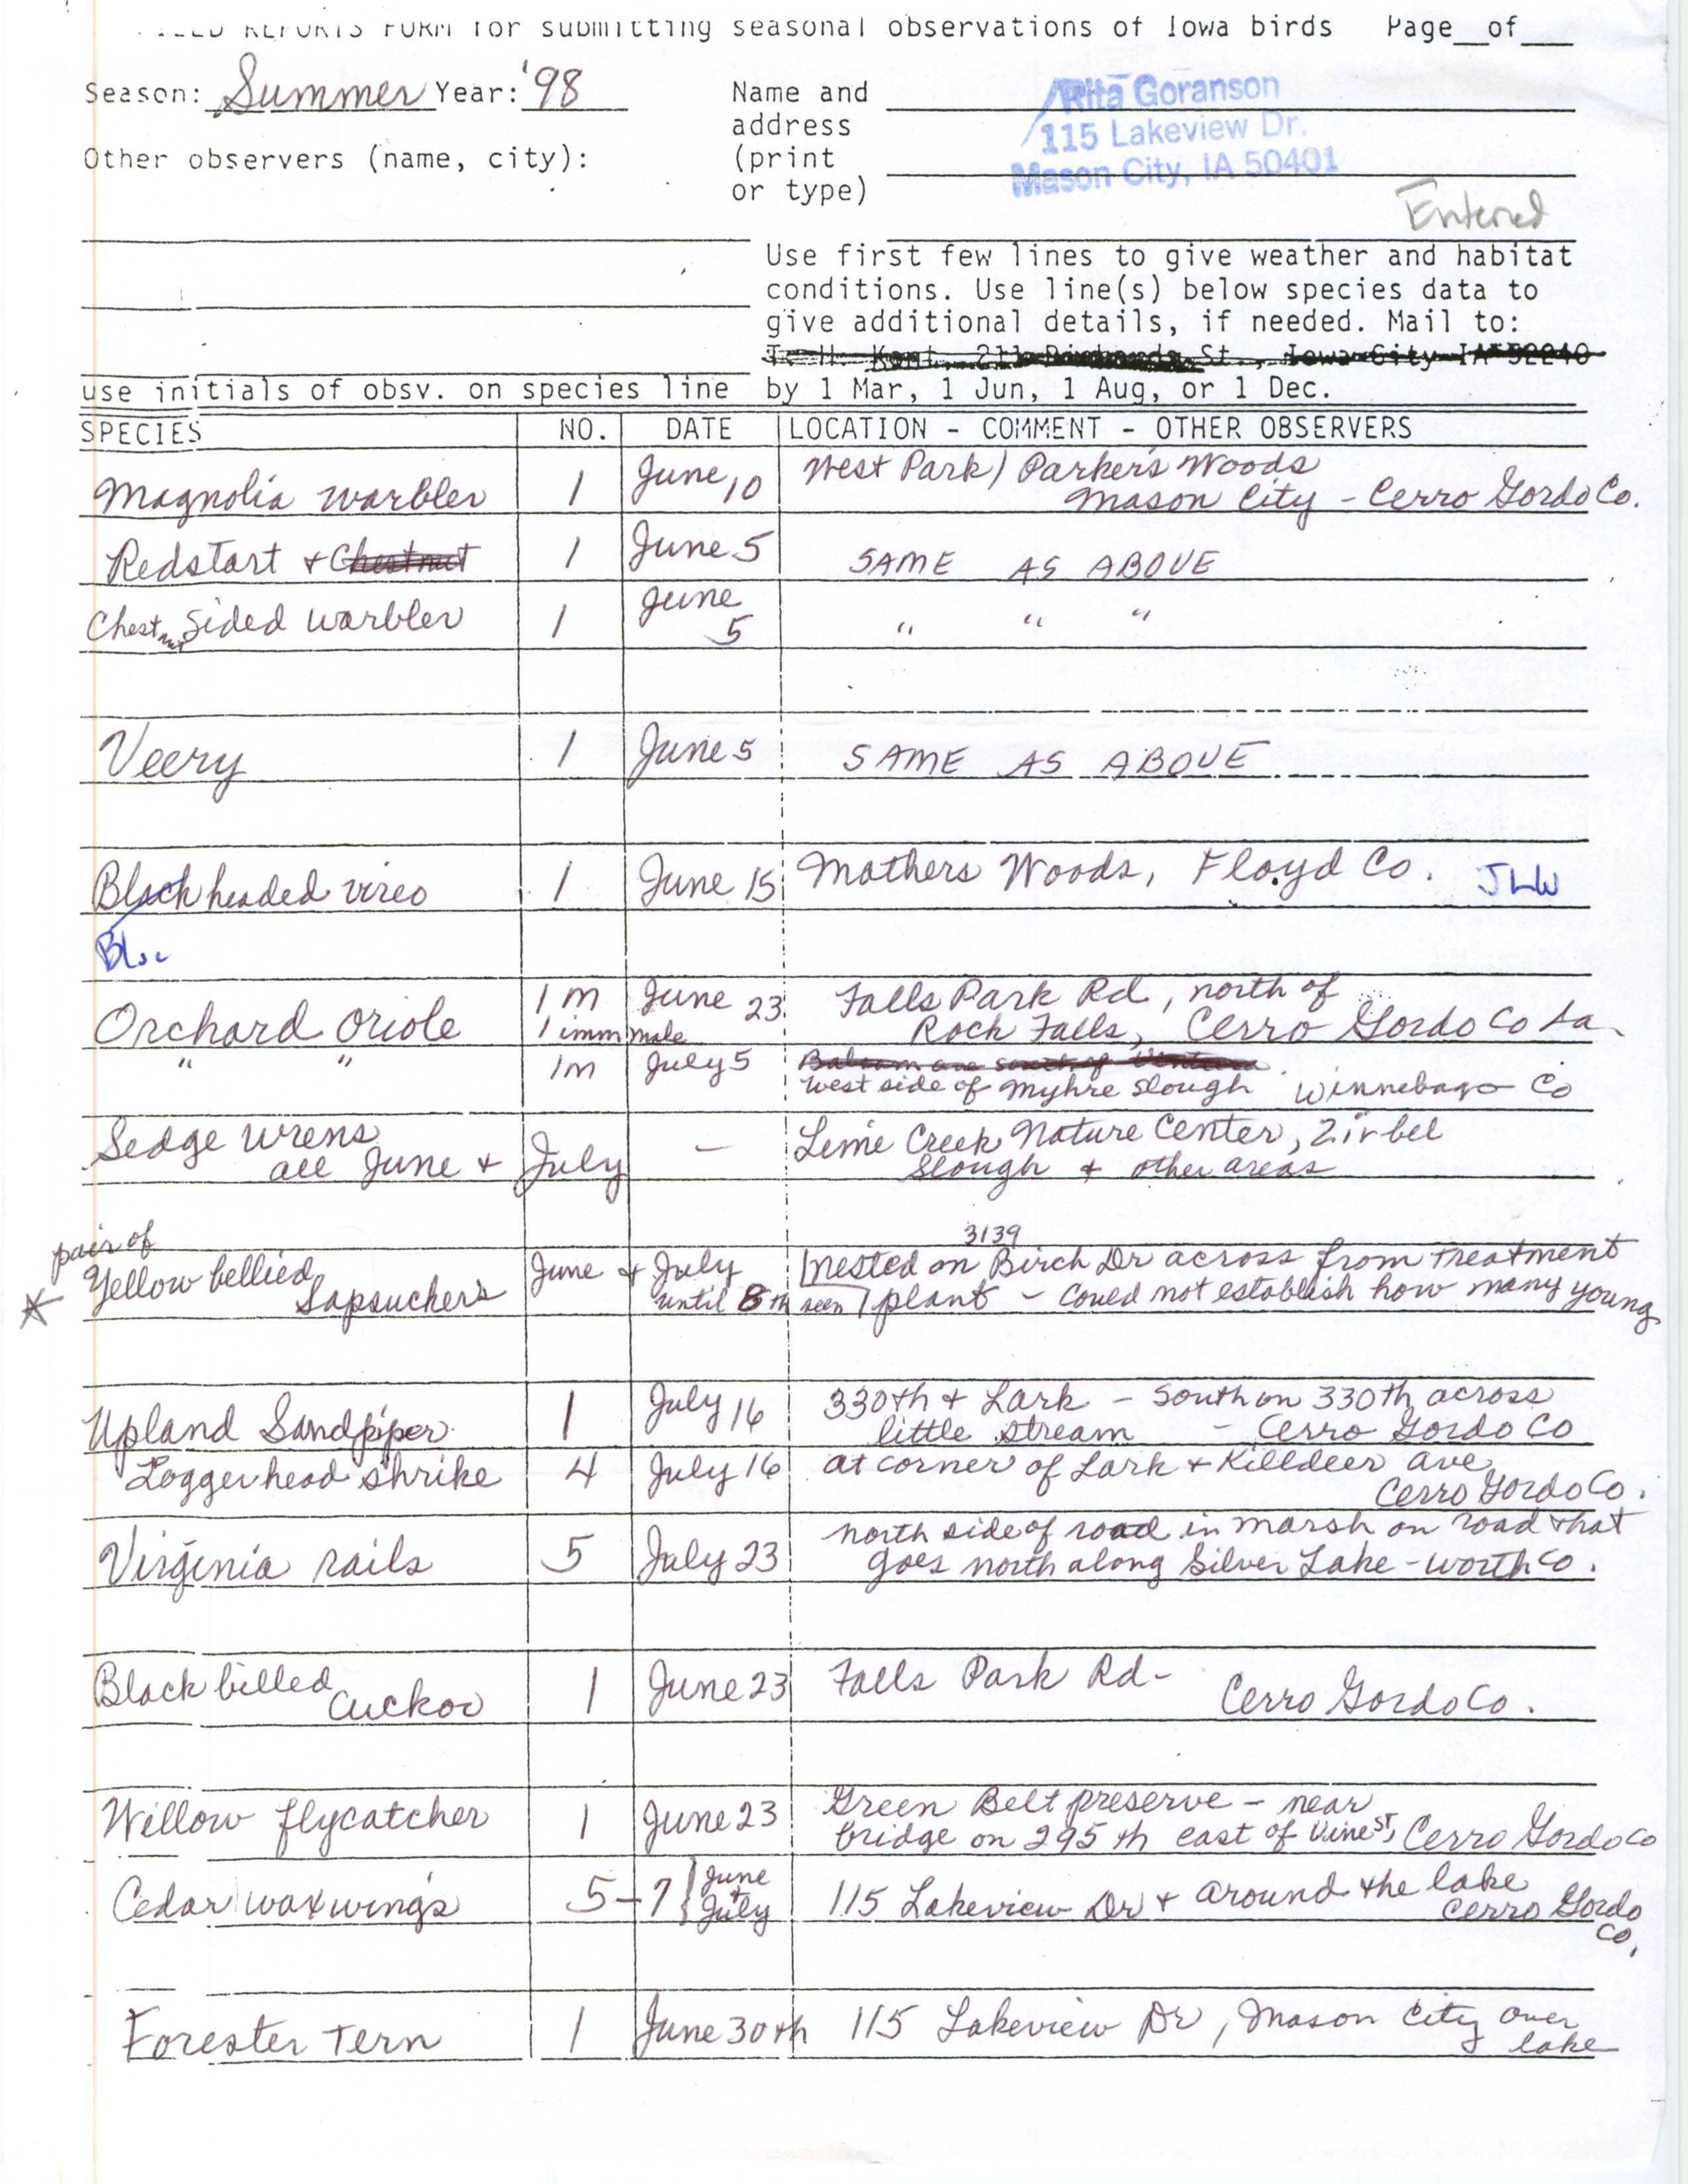 Field reports form for submitting seasonal observations of Iowa birds, Rita Goranson, summer 1998